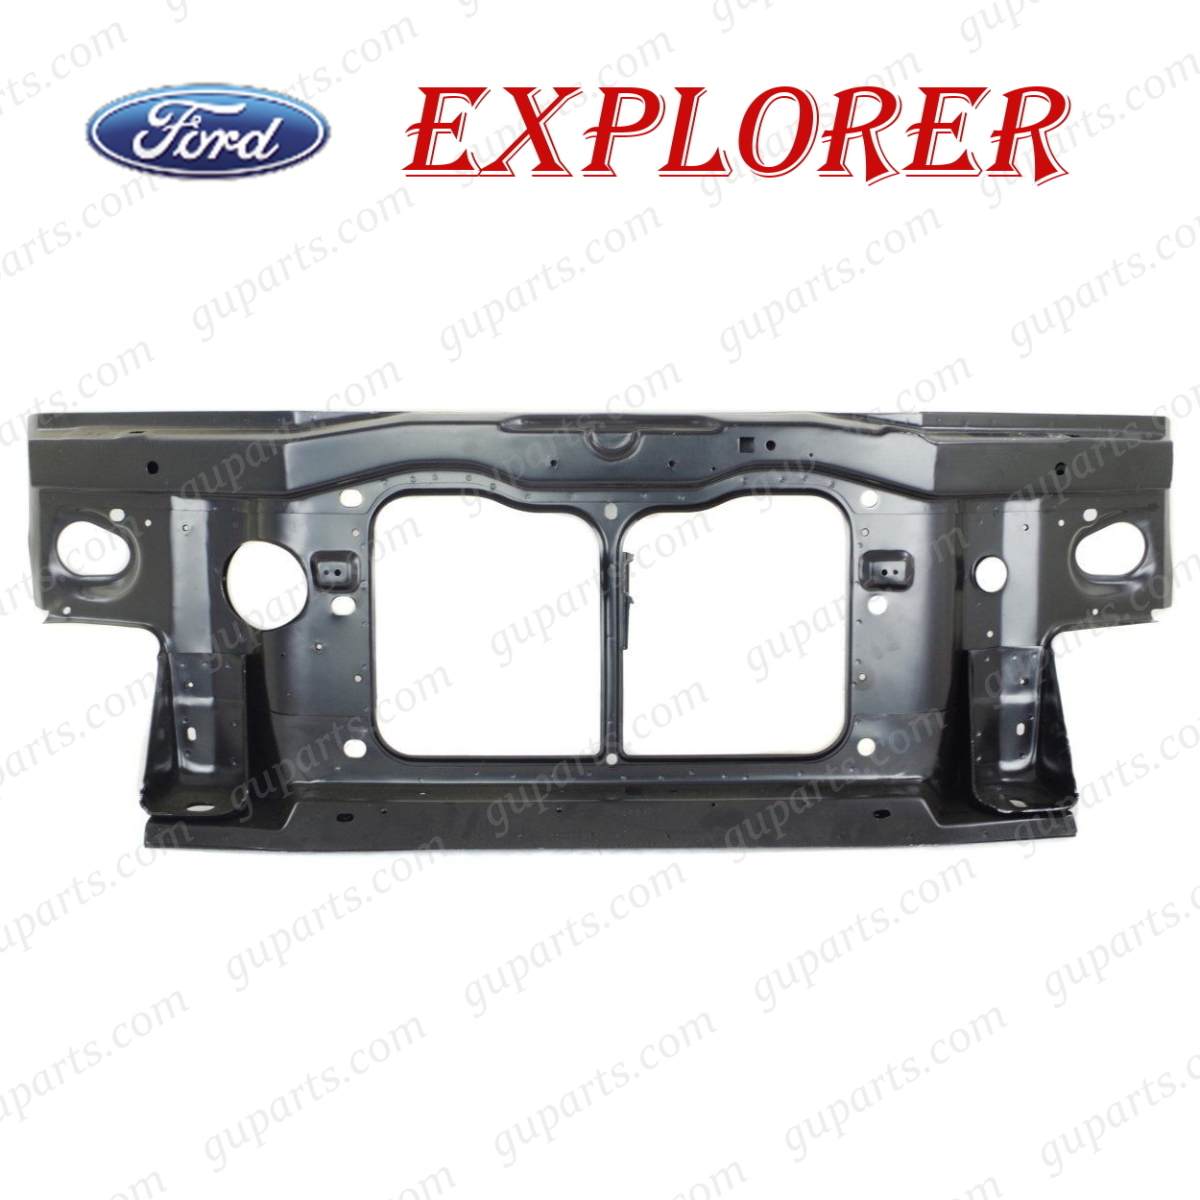  Ford Explorer спорт грузовик 1FM передний бампер базовая планка 1FMWU74 1FMEU74 1FMKU51 1FM8U53 6L2Z16138A